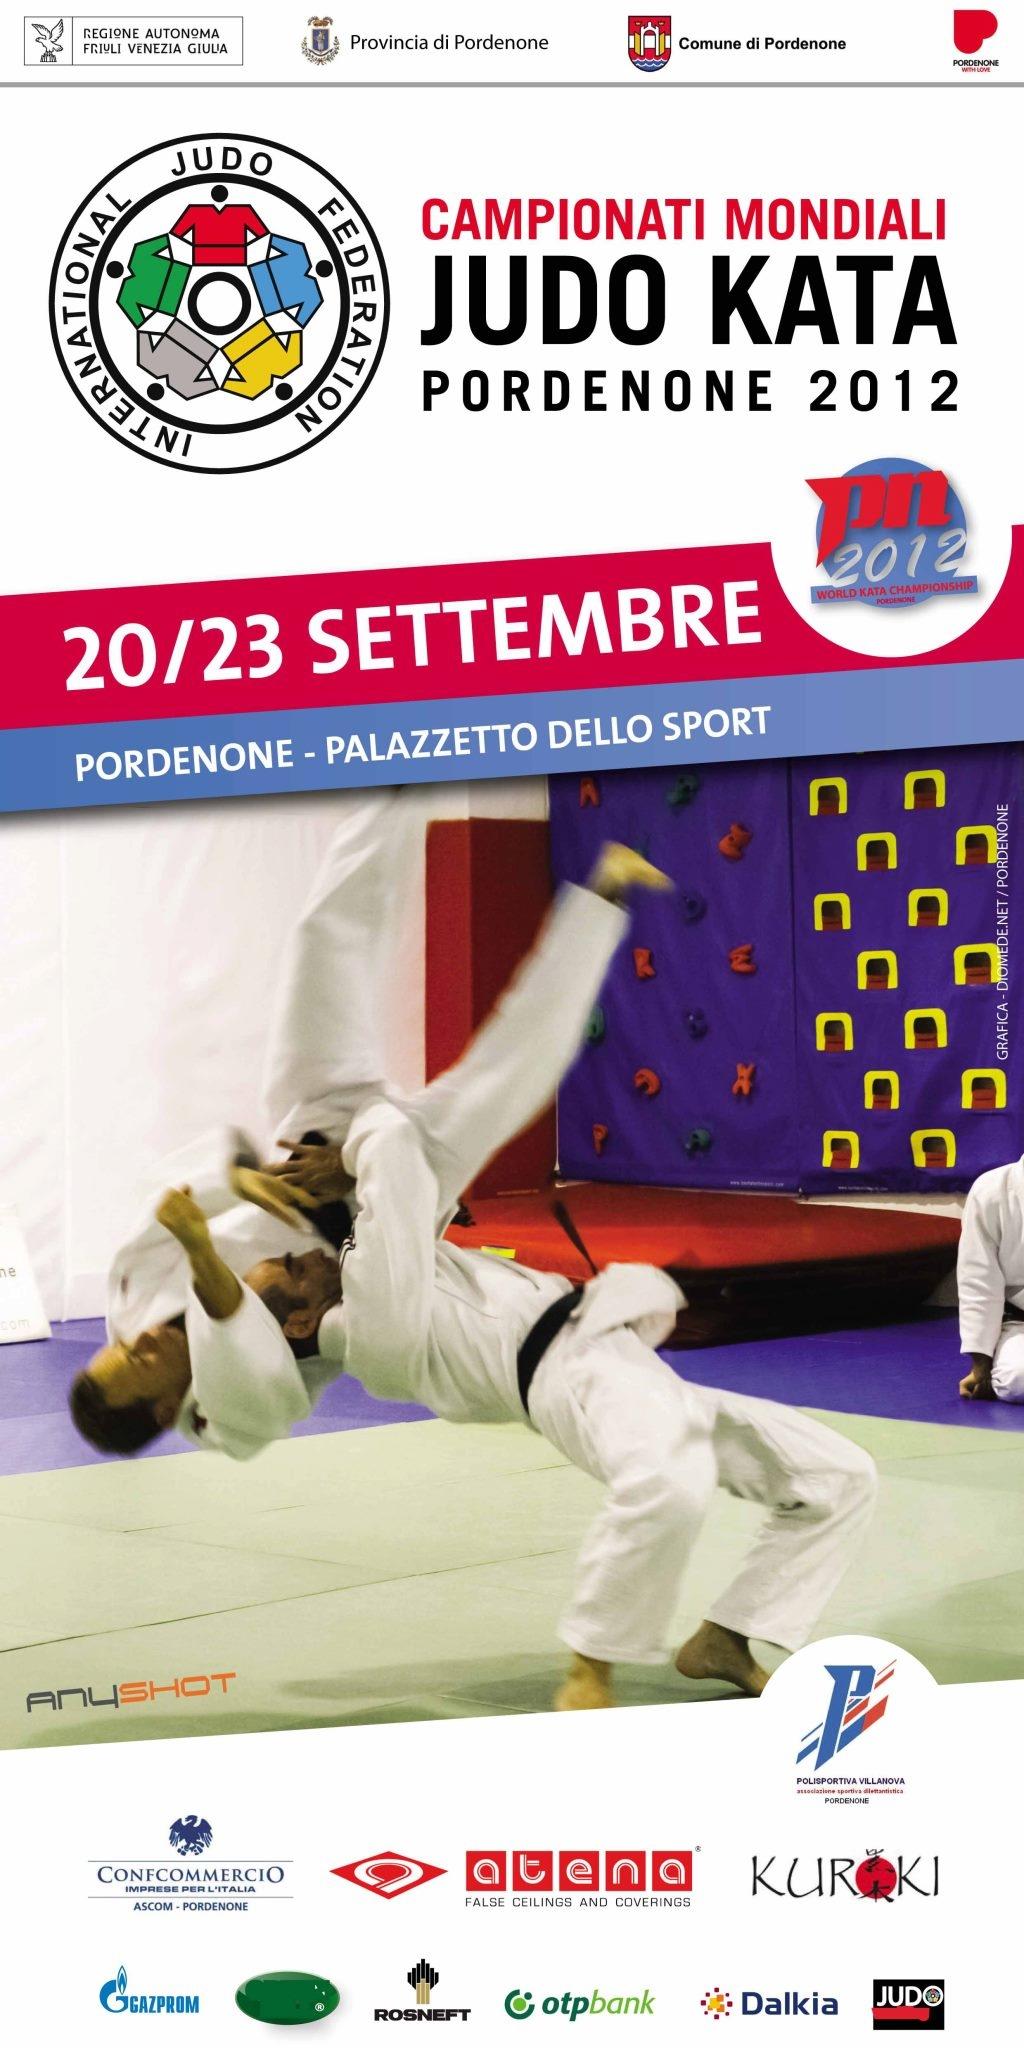 Website Kata World Championships in Pordenone online